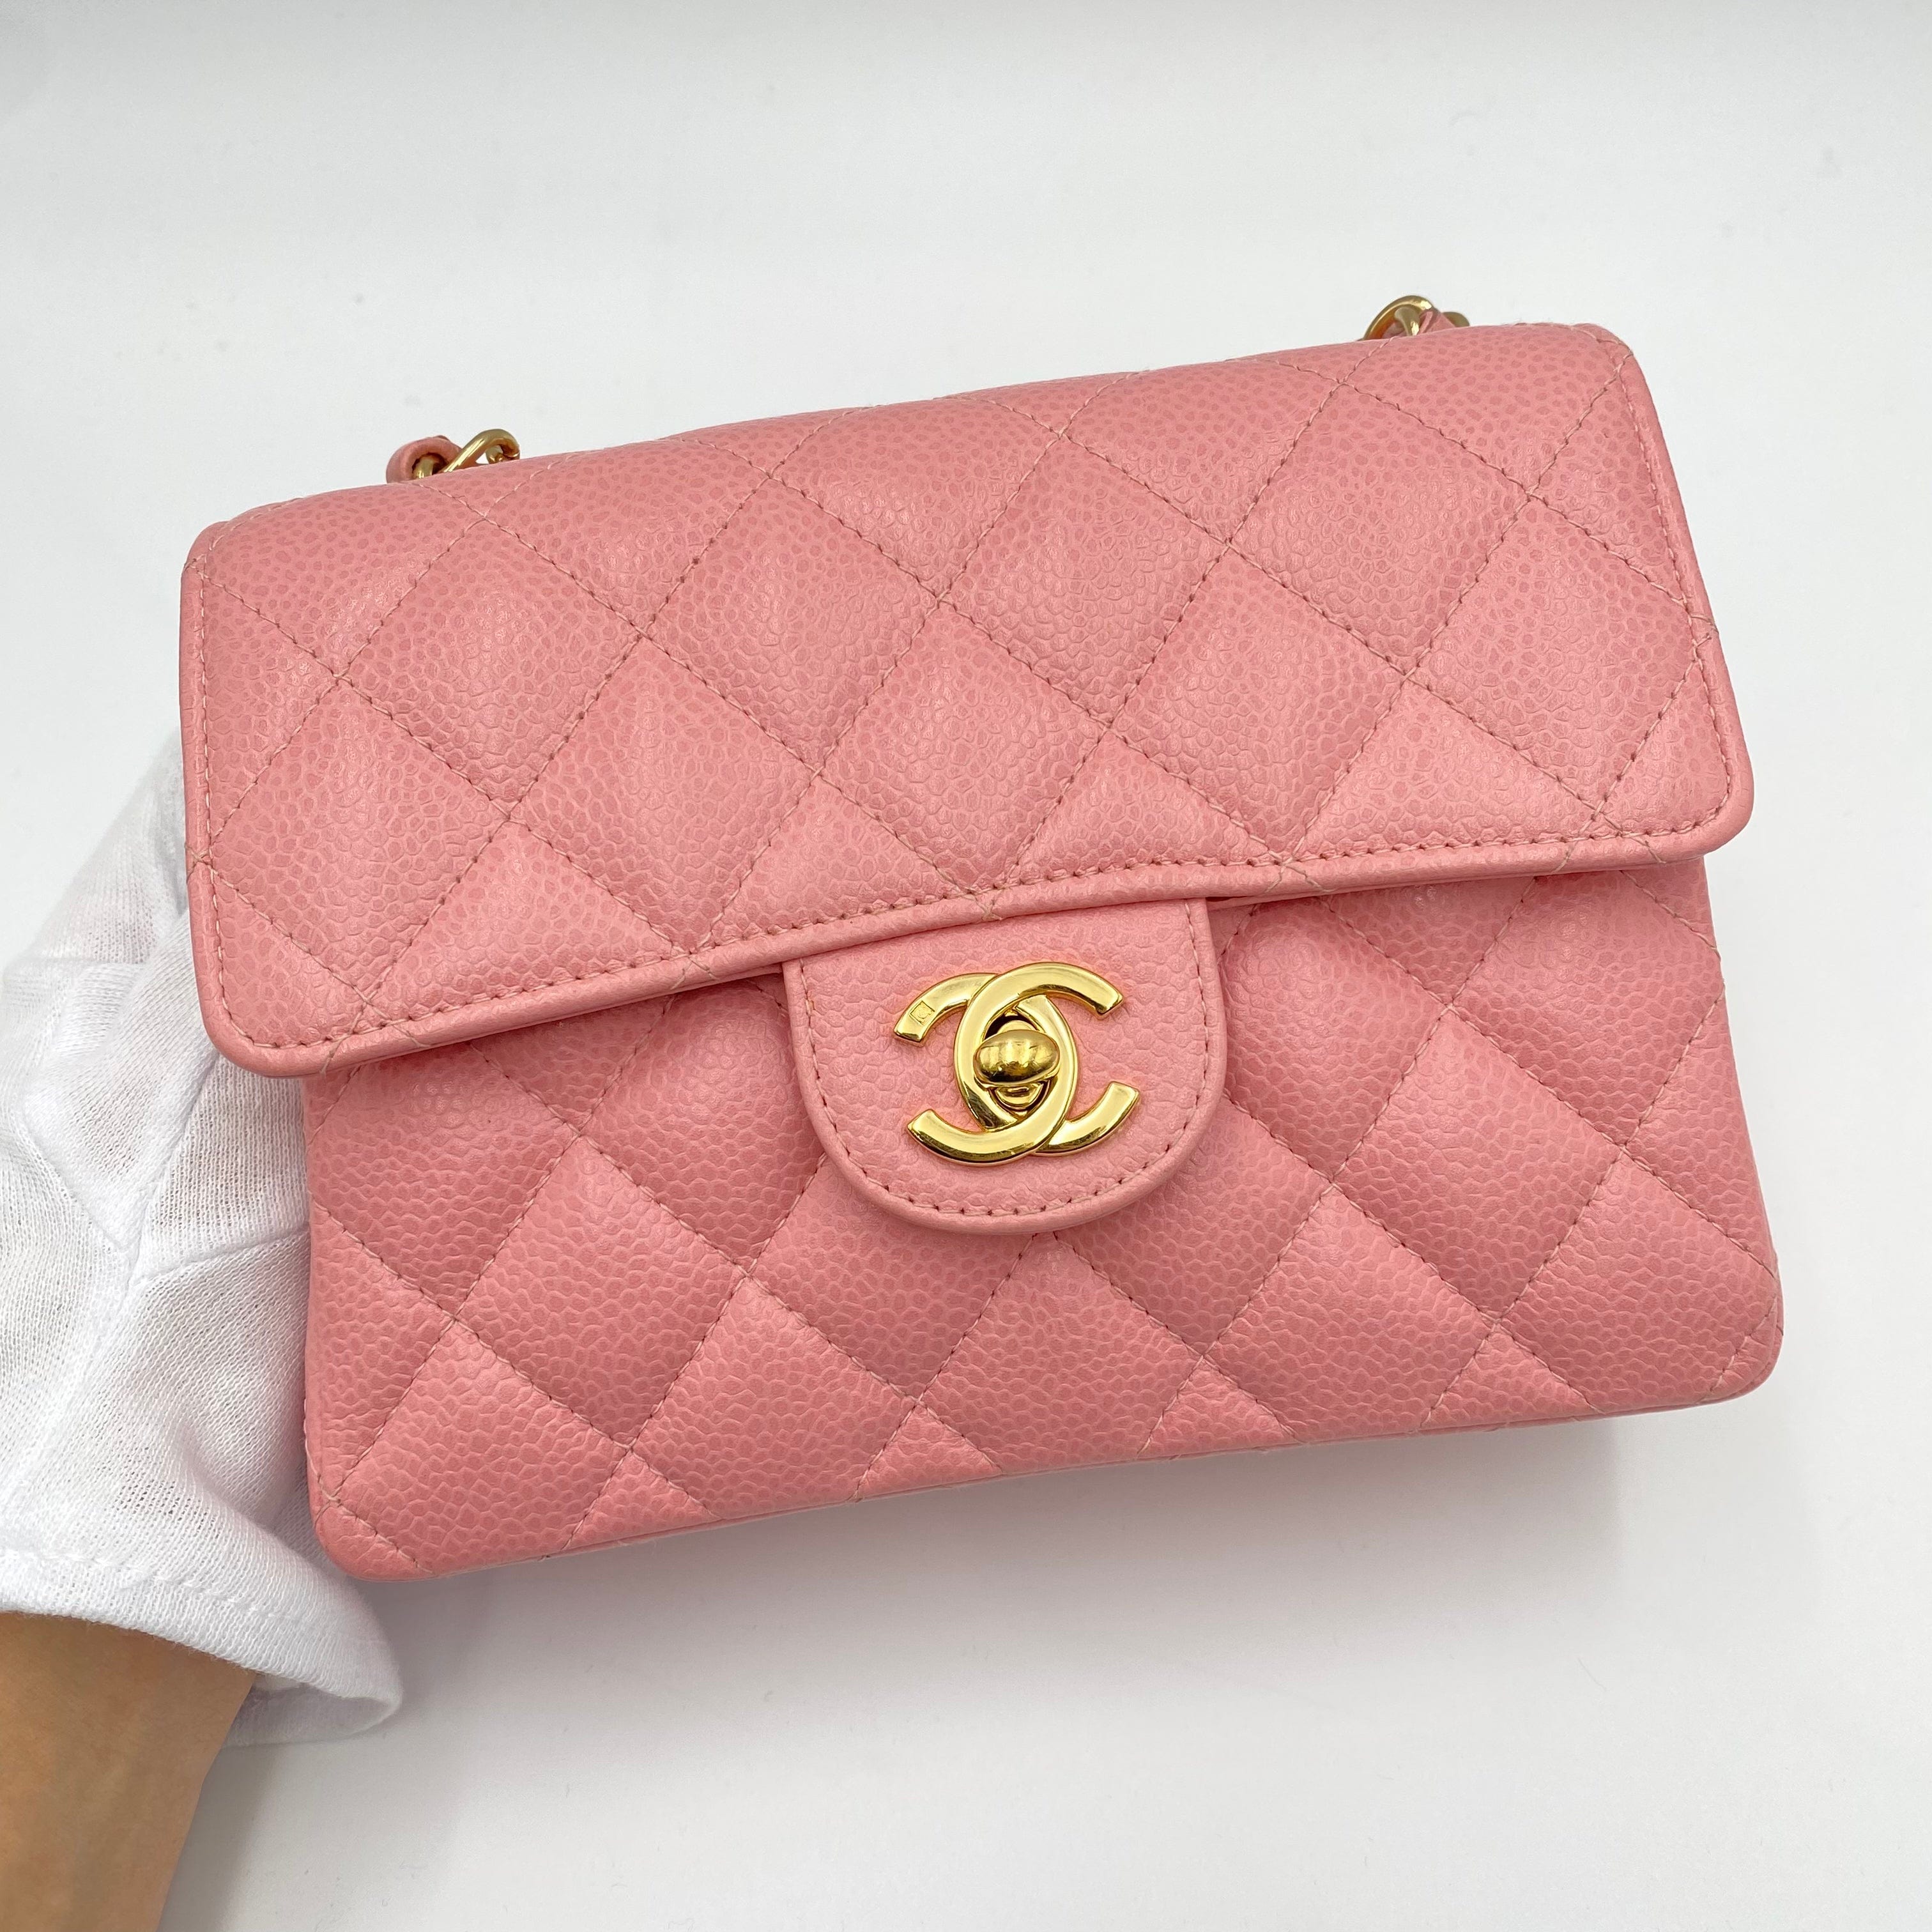 Chanel CHANEL VINTAGE MINI SQUARE 17 CHAIN SHOULDER BAG PINK CAVIAR SKIN 90217452